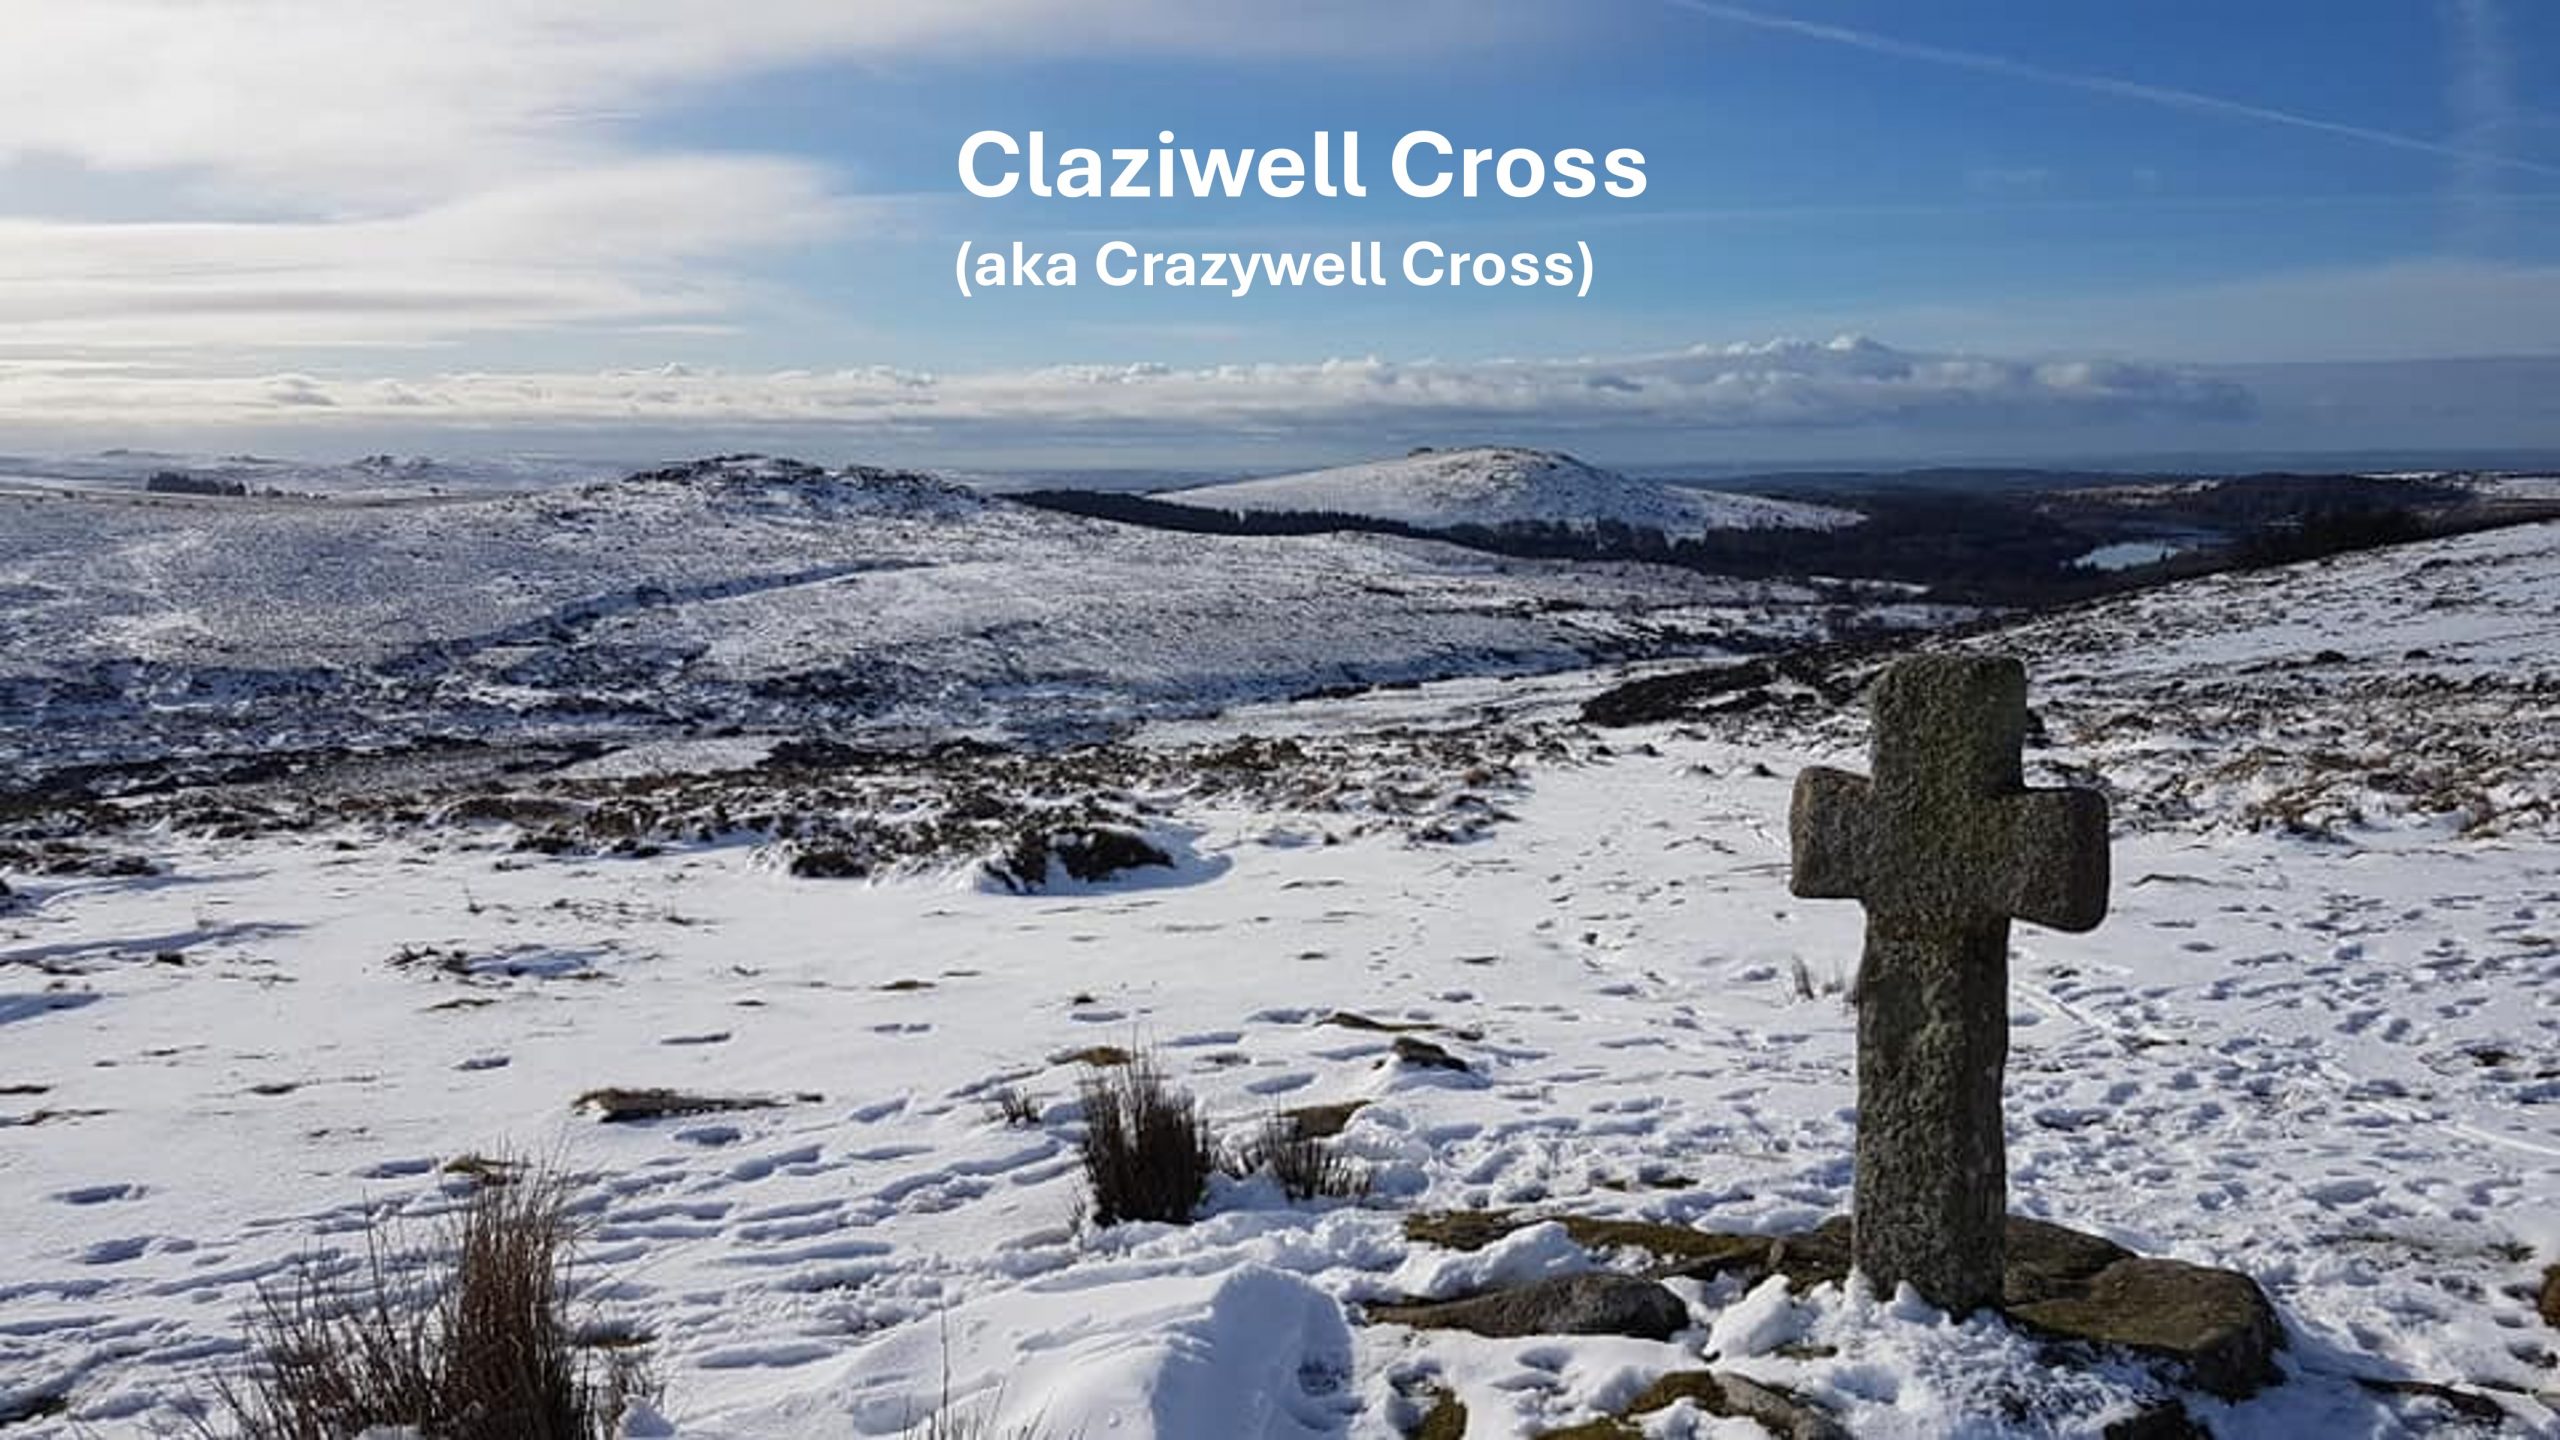 17. Crazywell Cross